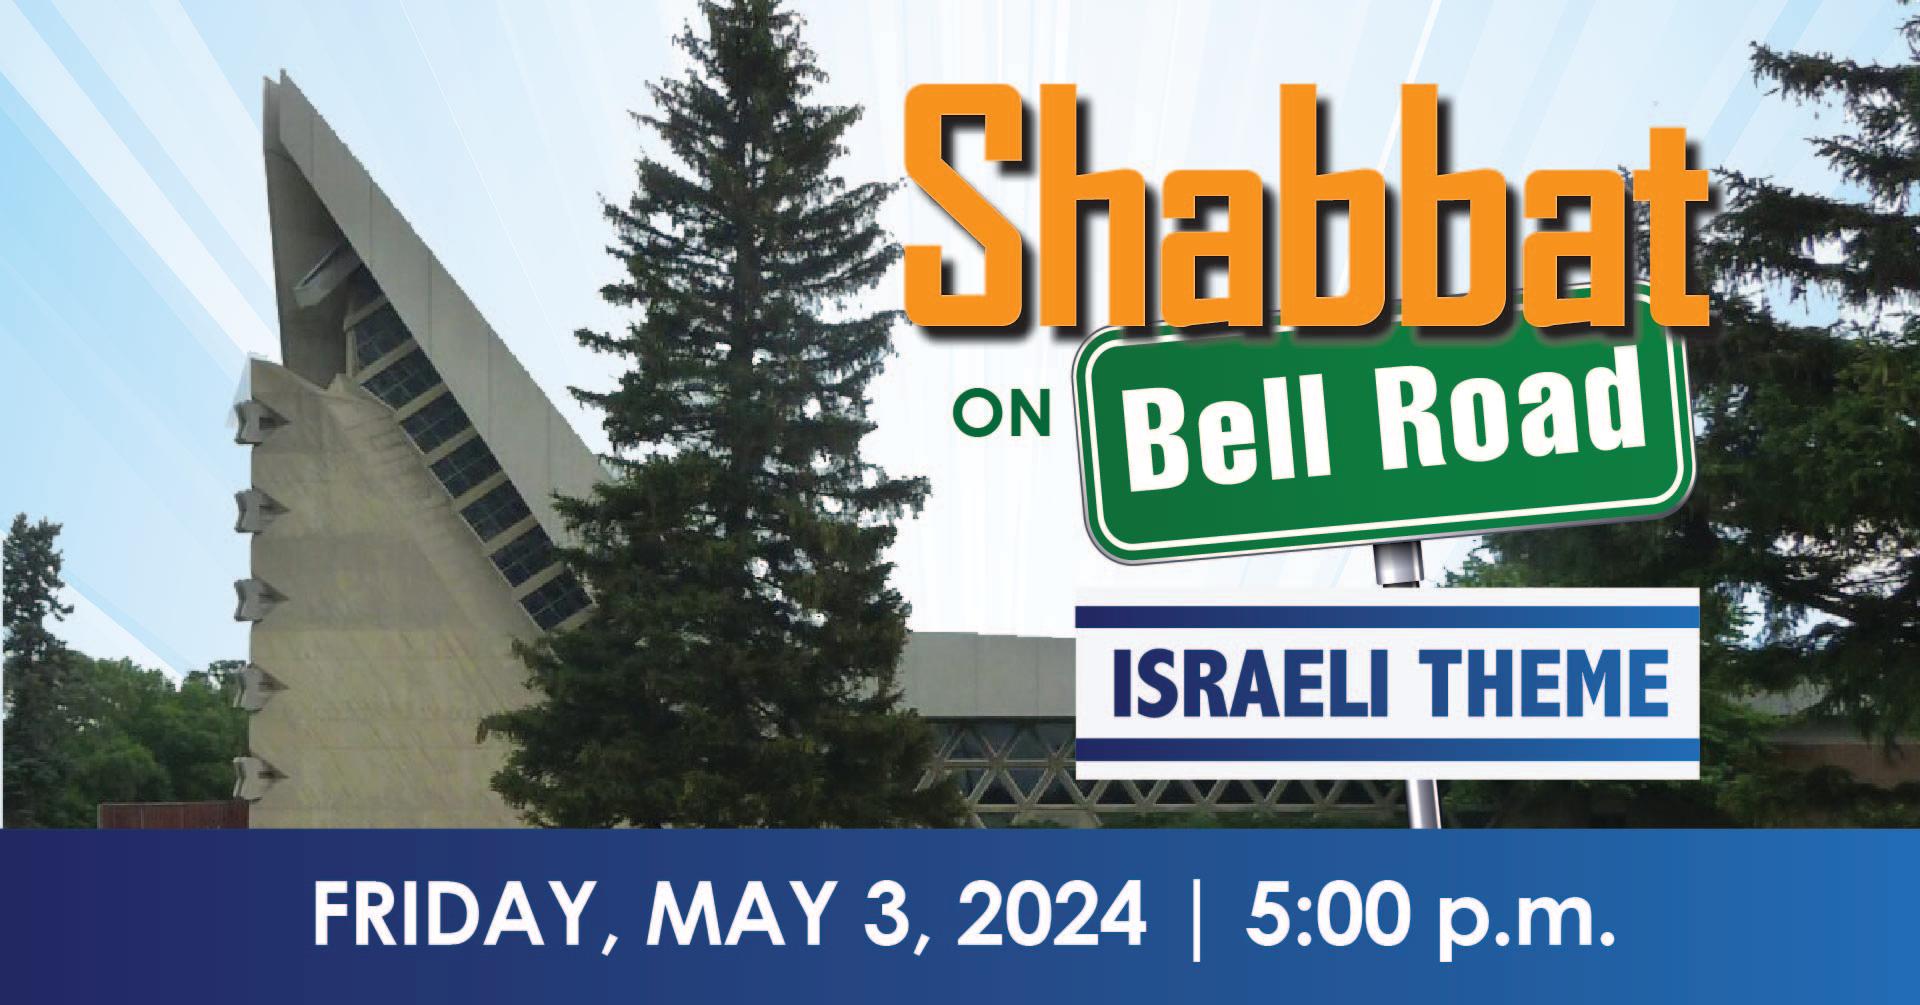 Shabbat on Bell Road - Israeli Theme